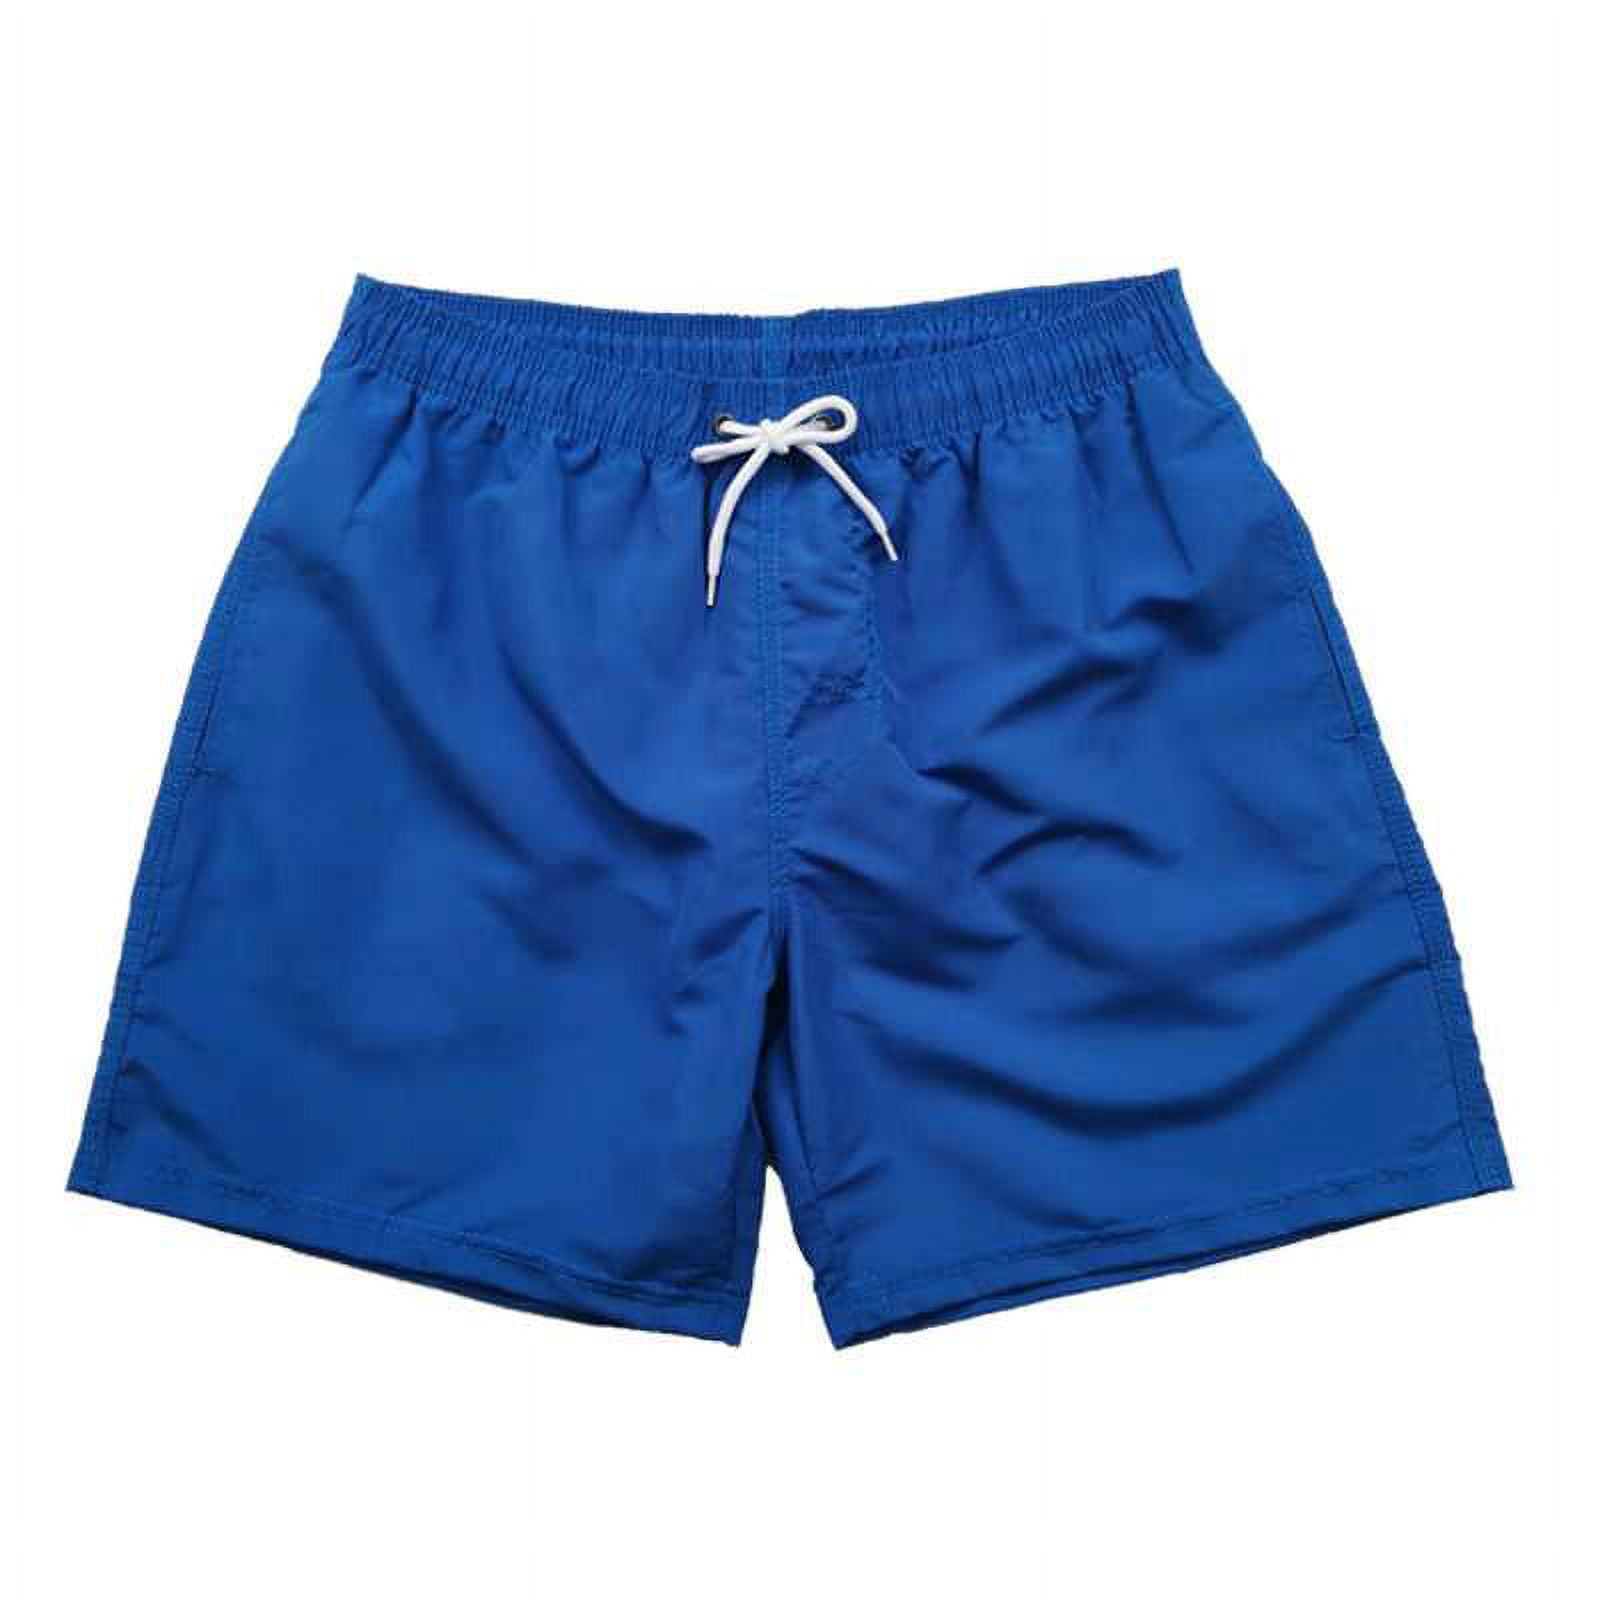 Fashionable Summer Swim Trunks for Men, Quick Dry Swim Shorts for Men,  Swimwear, Bathing Suits, Swim Shorts with Various Colors & Designs,  Quick Dry Nylon Shorts, Blue (Solid), Medium 